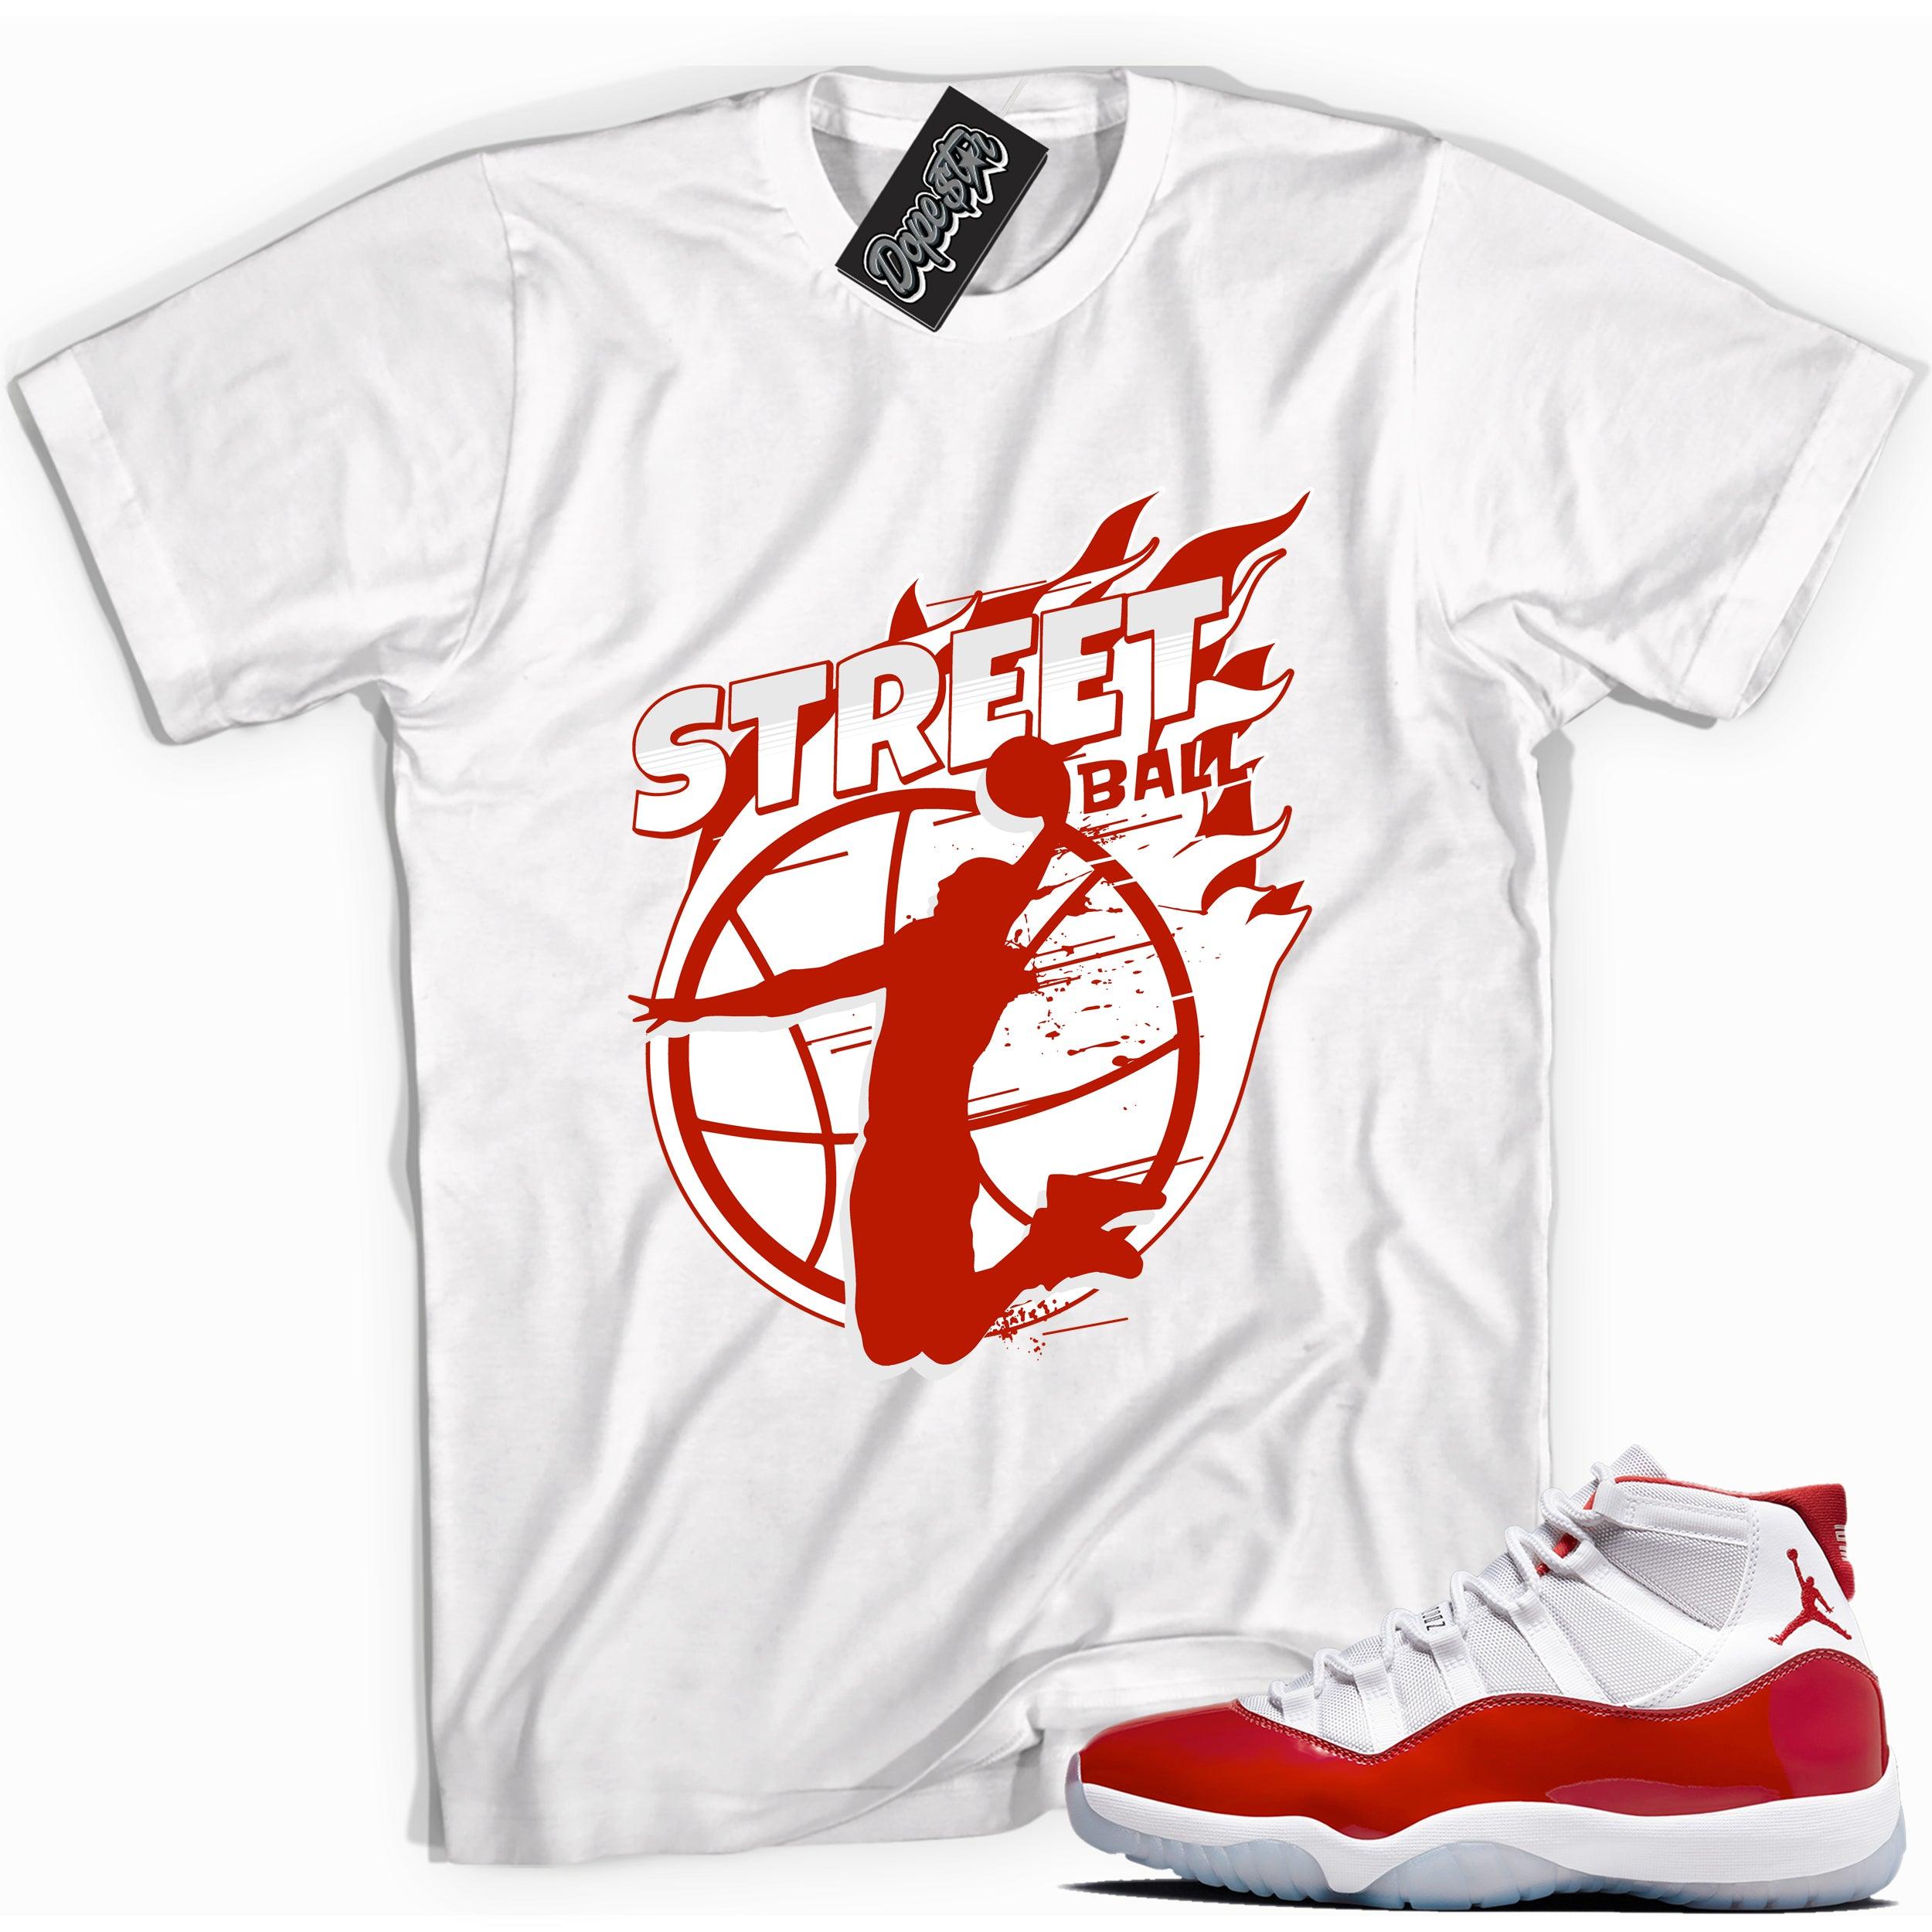 Street Ball Sneaker Tee Air Jordan 11 Cherry photo